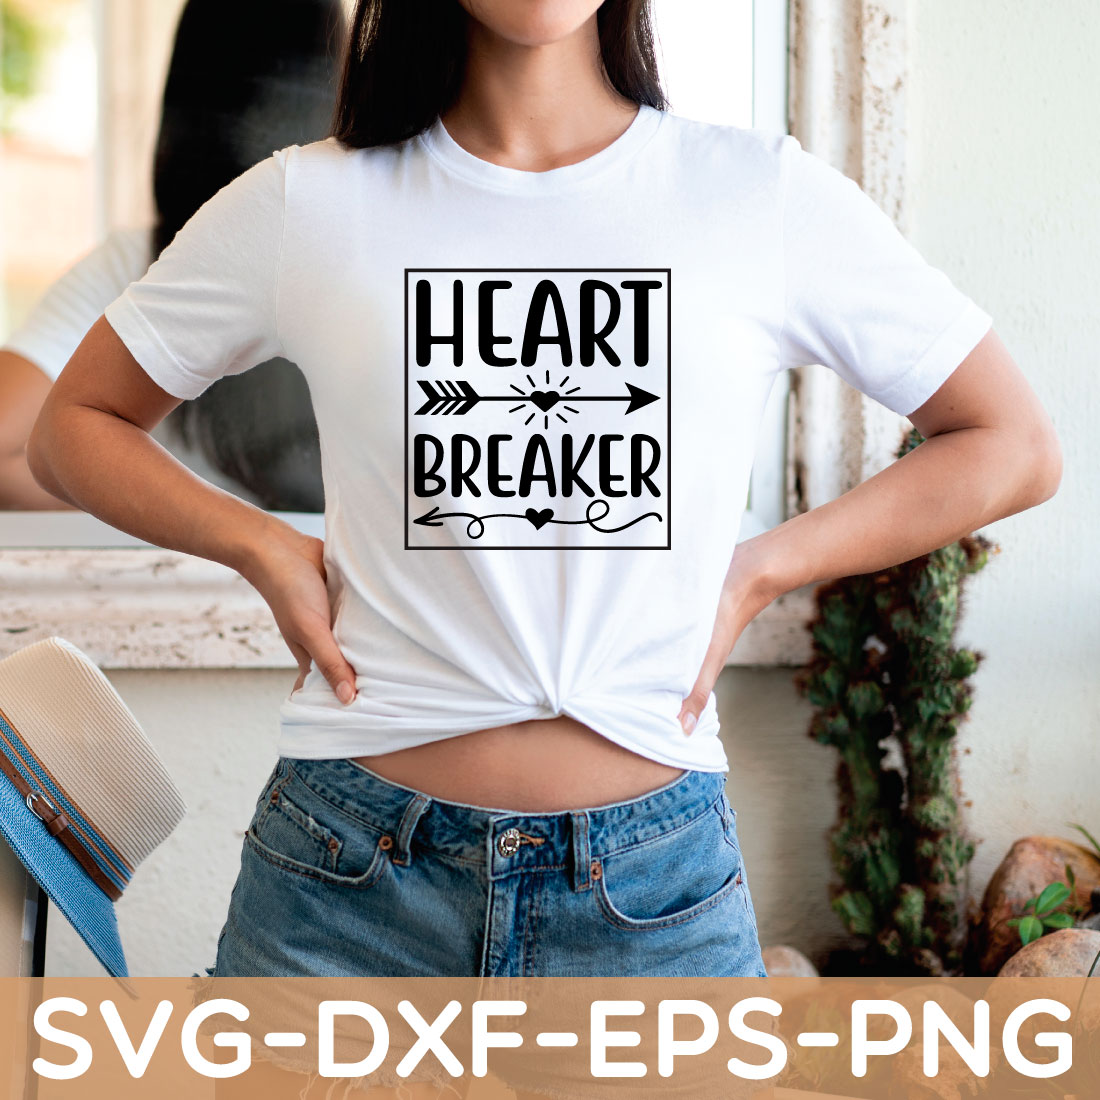 heart breaker shirt preview image.